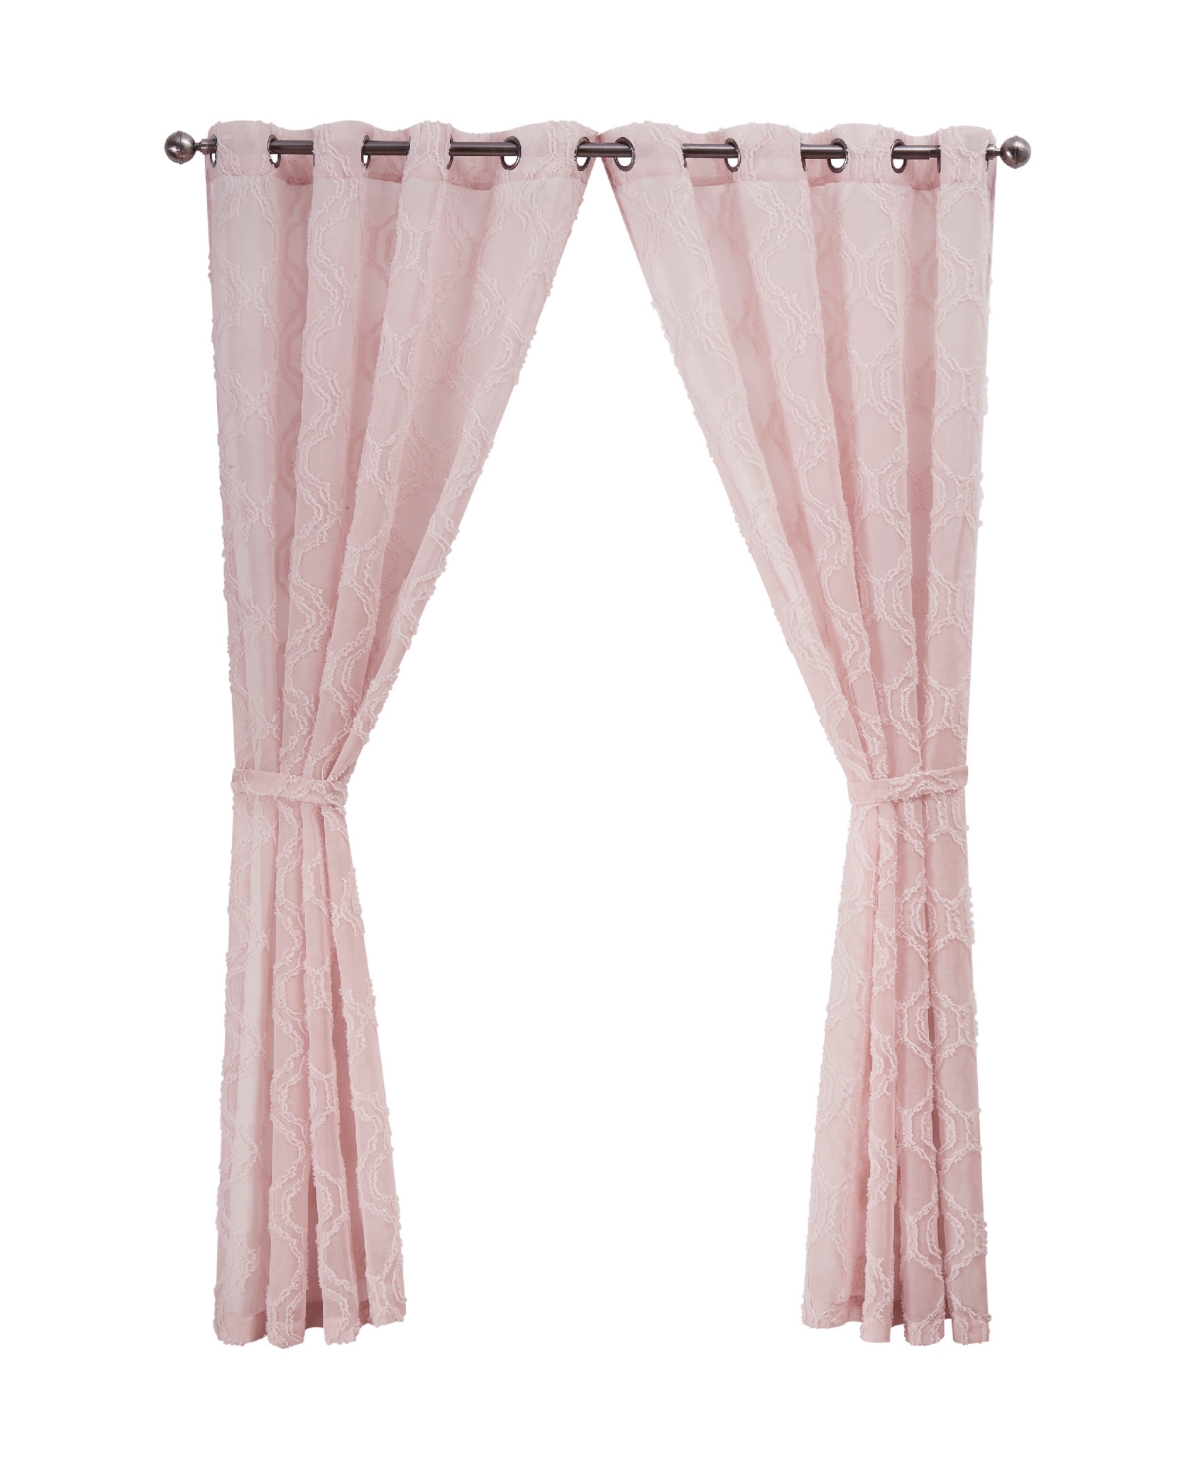 Jessica Simpson Everyn Sheer Embellished Grommet Window Curtain Panel Pair With Tiebacks, 52" X 96" In Blush Pink